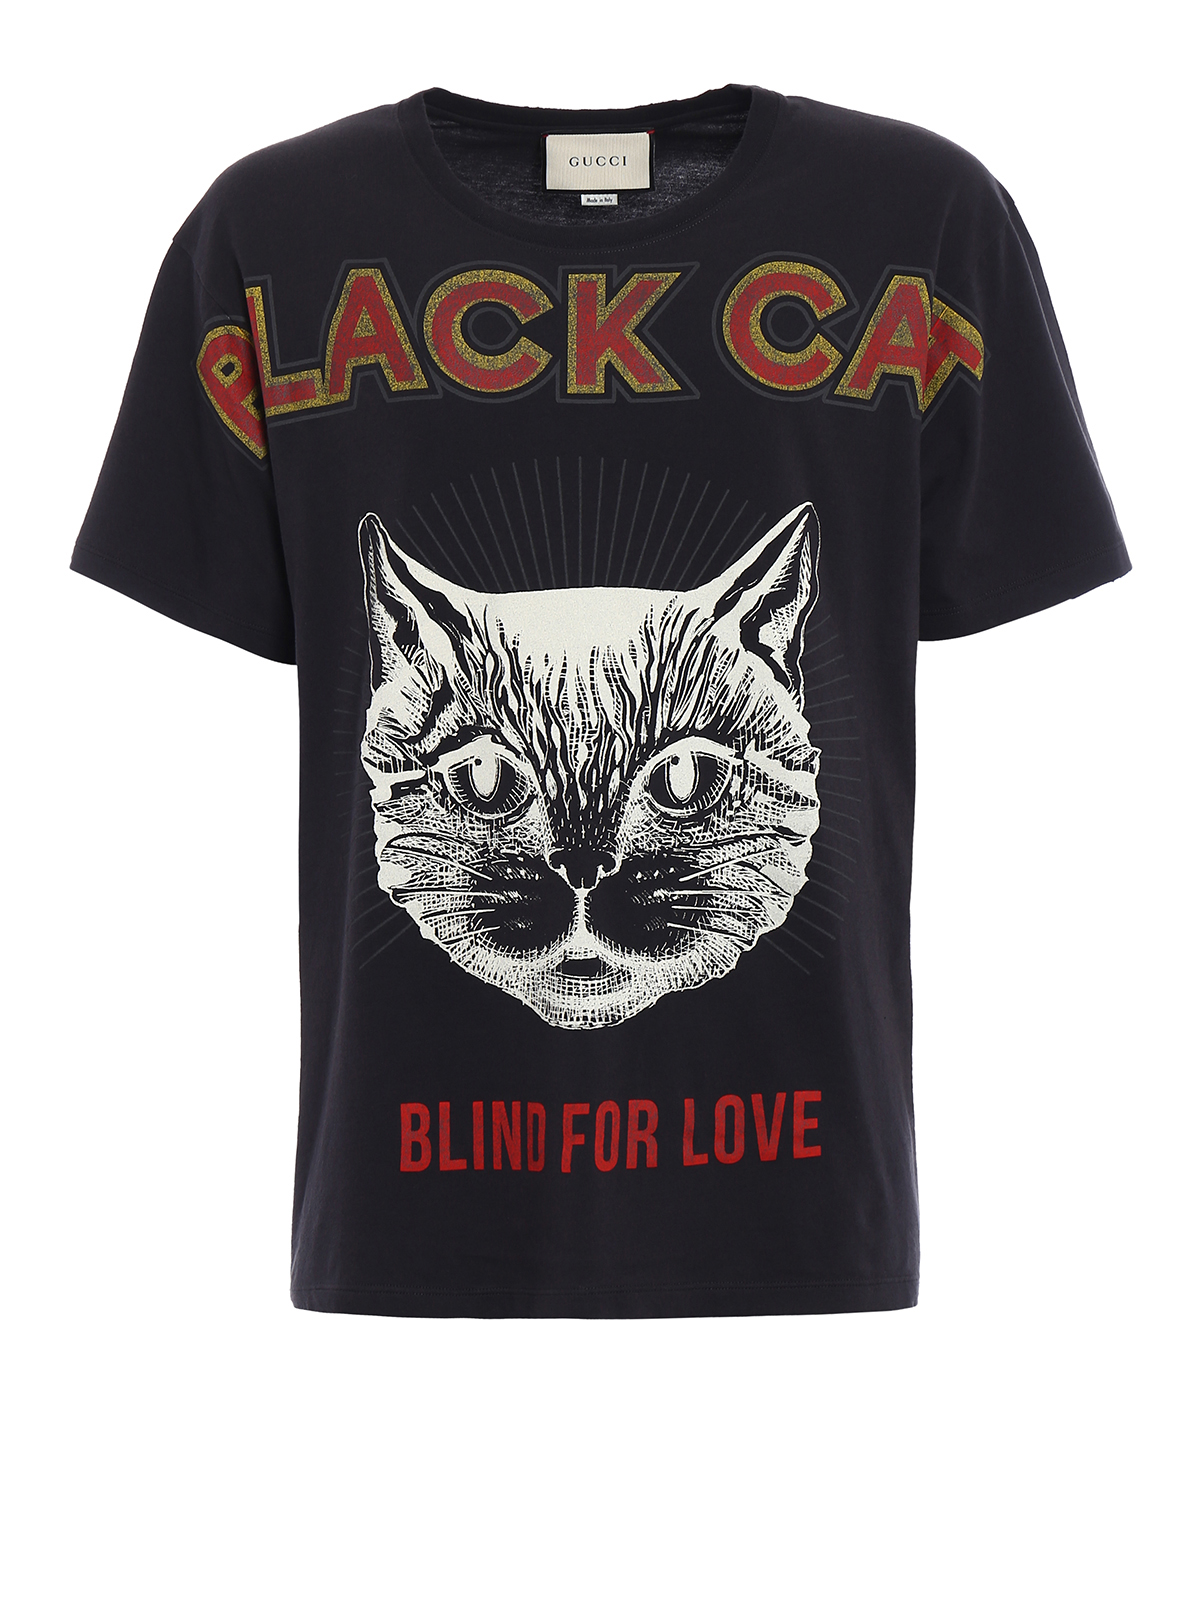 gucci shirt black cat